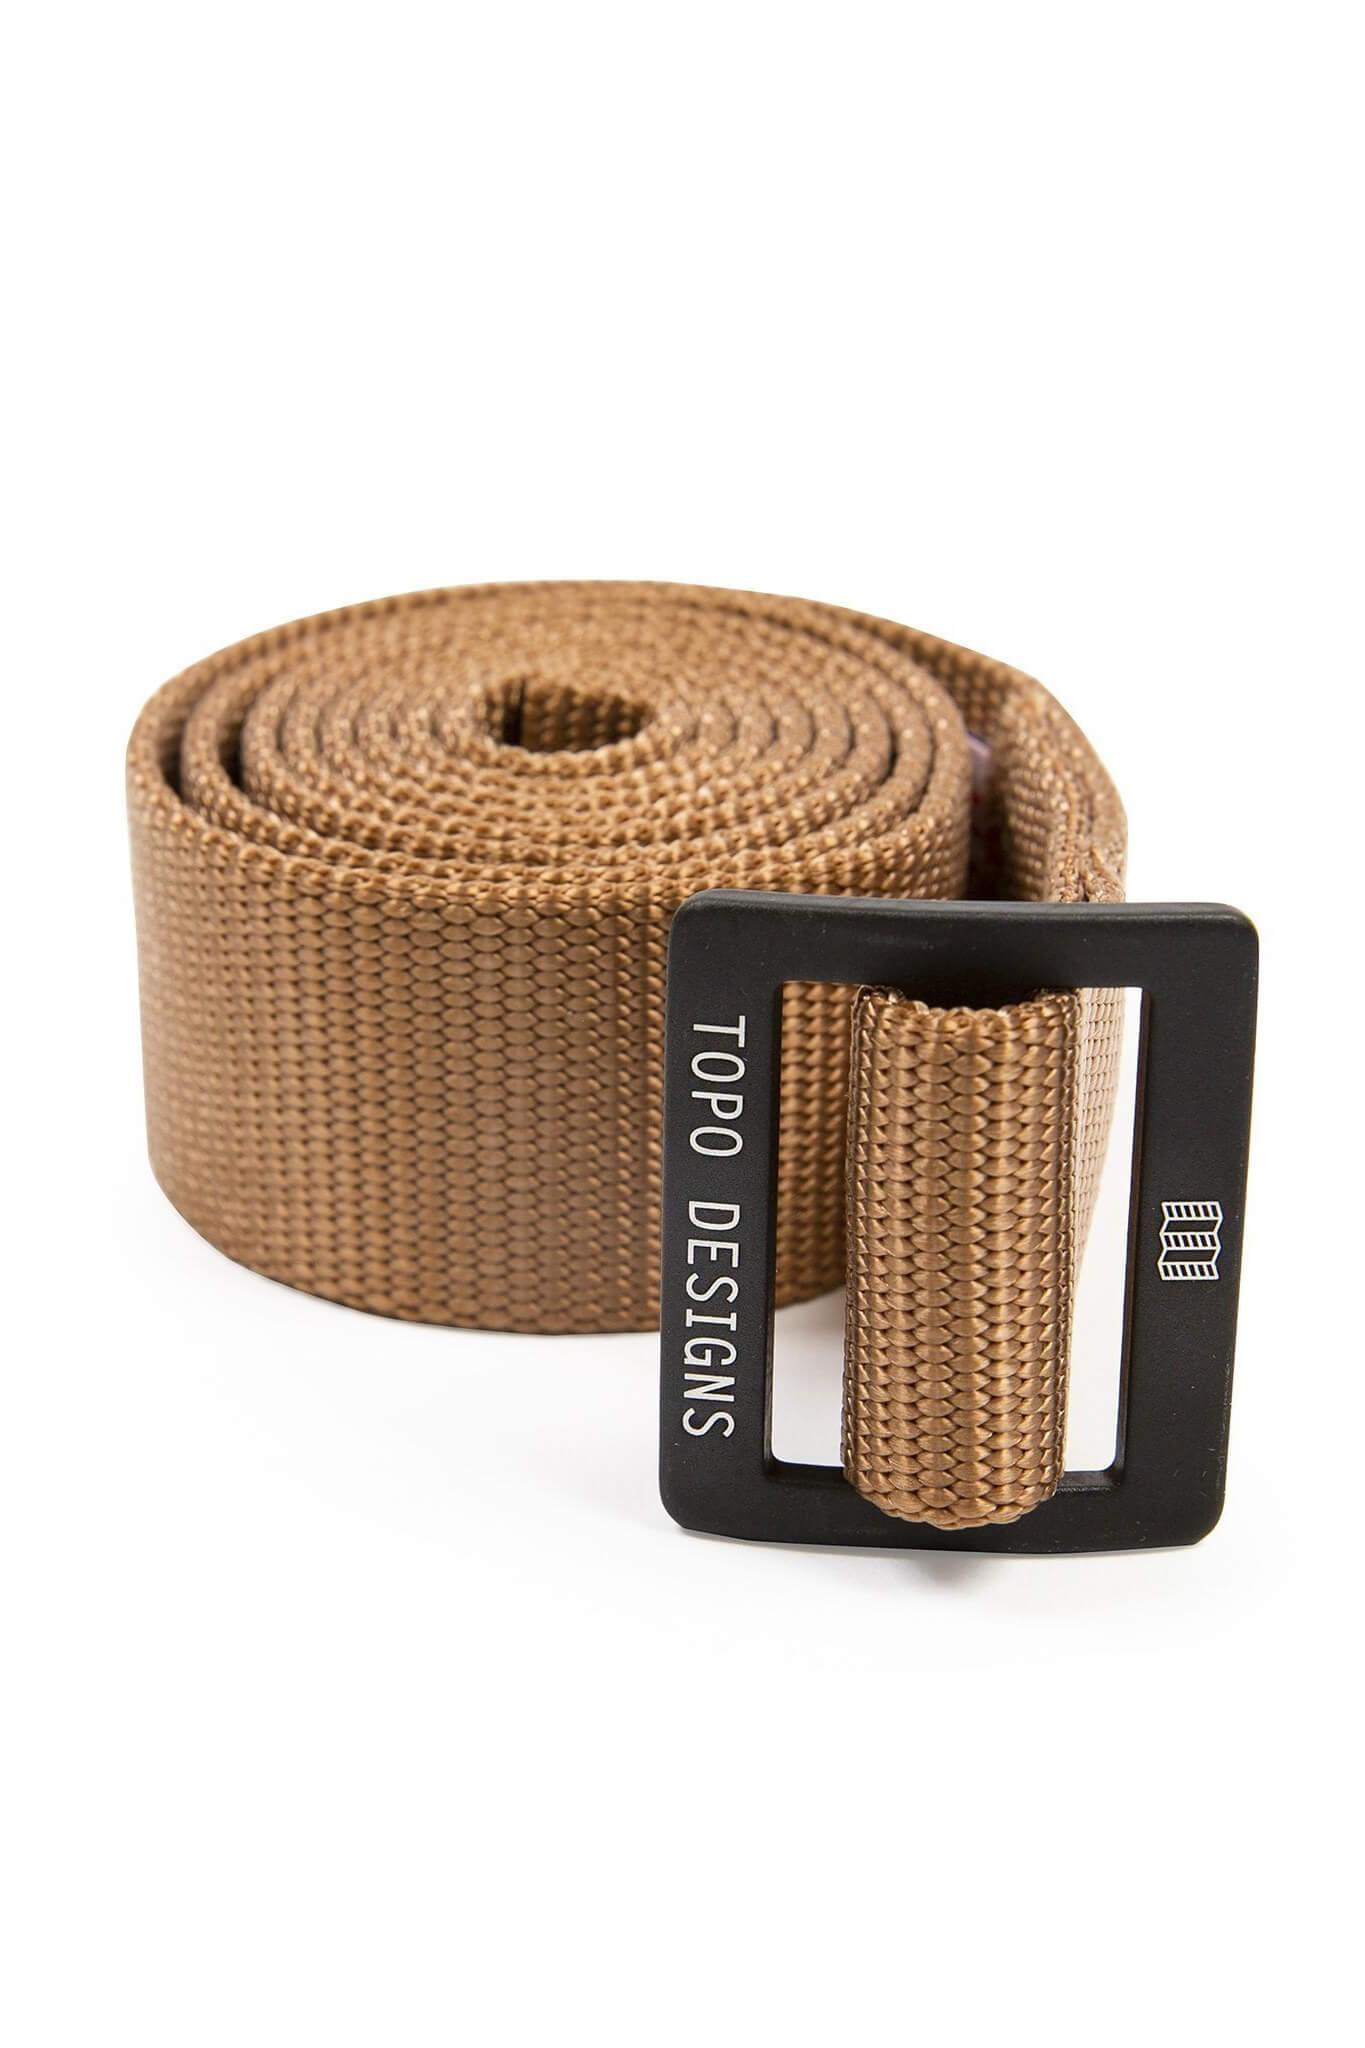 Topo Designs web belt in khaki